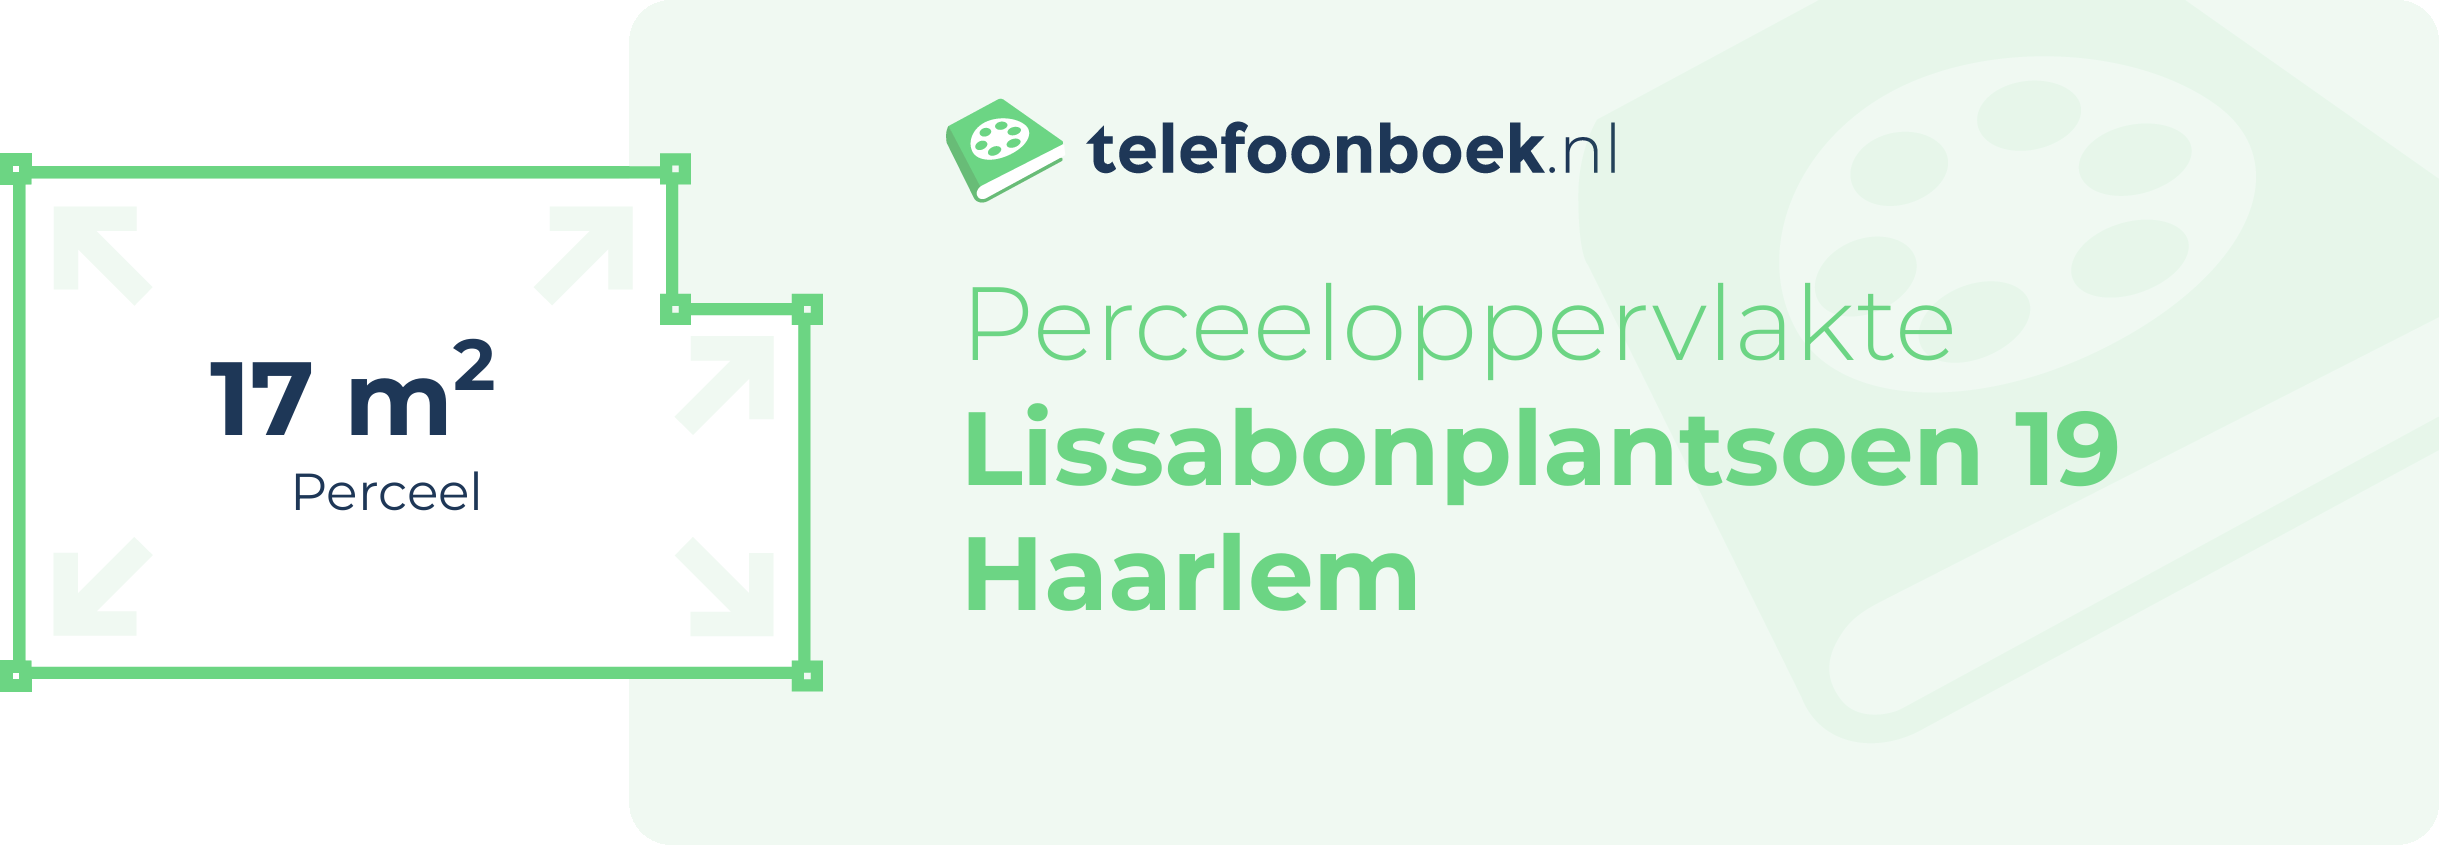 Perceeloppervlakte Lissabonplantsoen 19 Haarlem